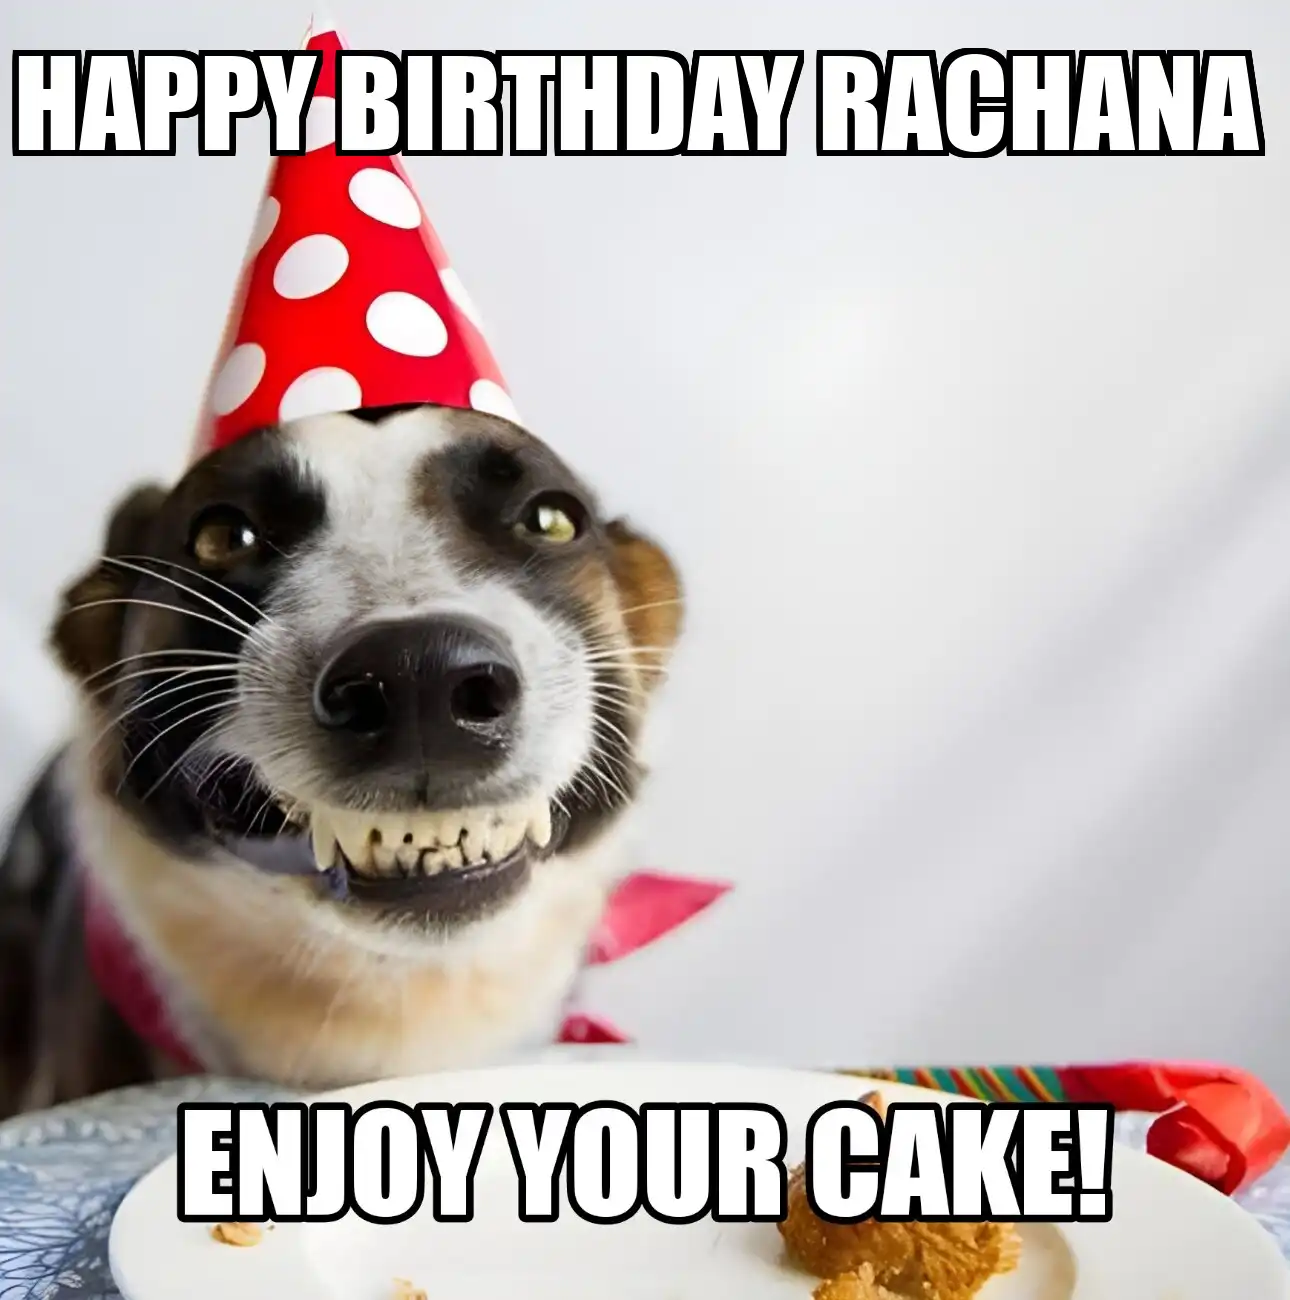 Happy Birthday Rachana Enjoy Your Cake Dog Meme